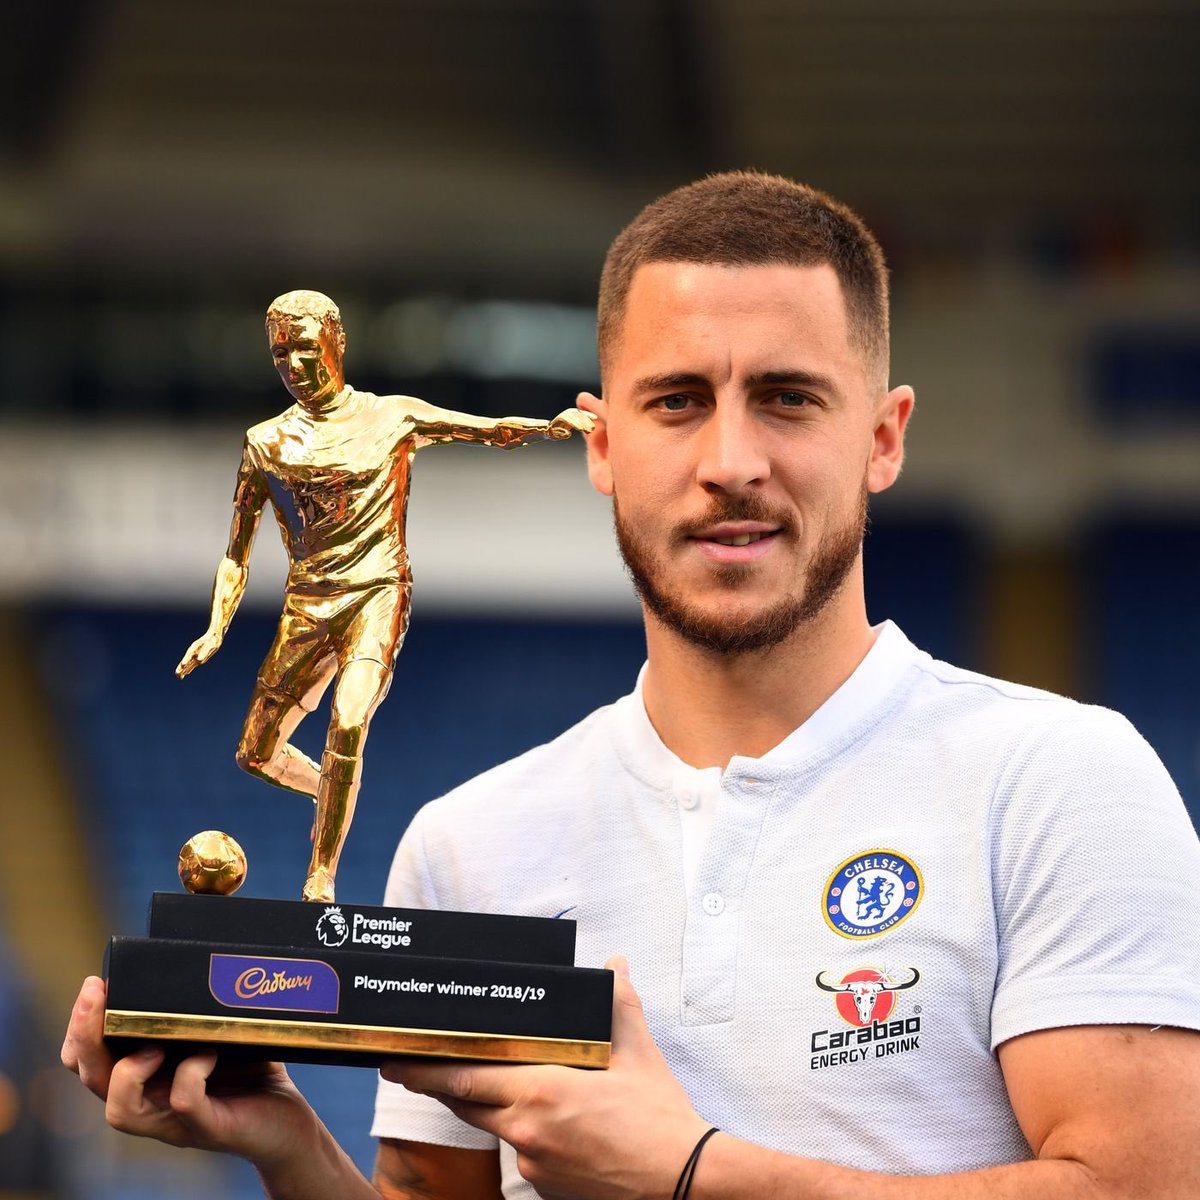 2/3 Hazard individual awardsPremier league player of the season 2014/152 premier league potm awards2 premier league gotm awardsPremier league Playmaker of the season 2018/19